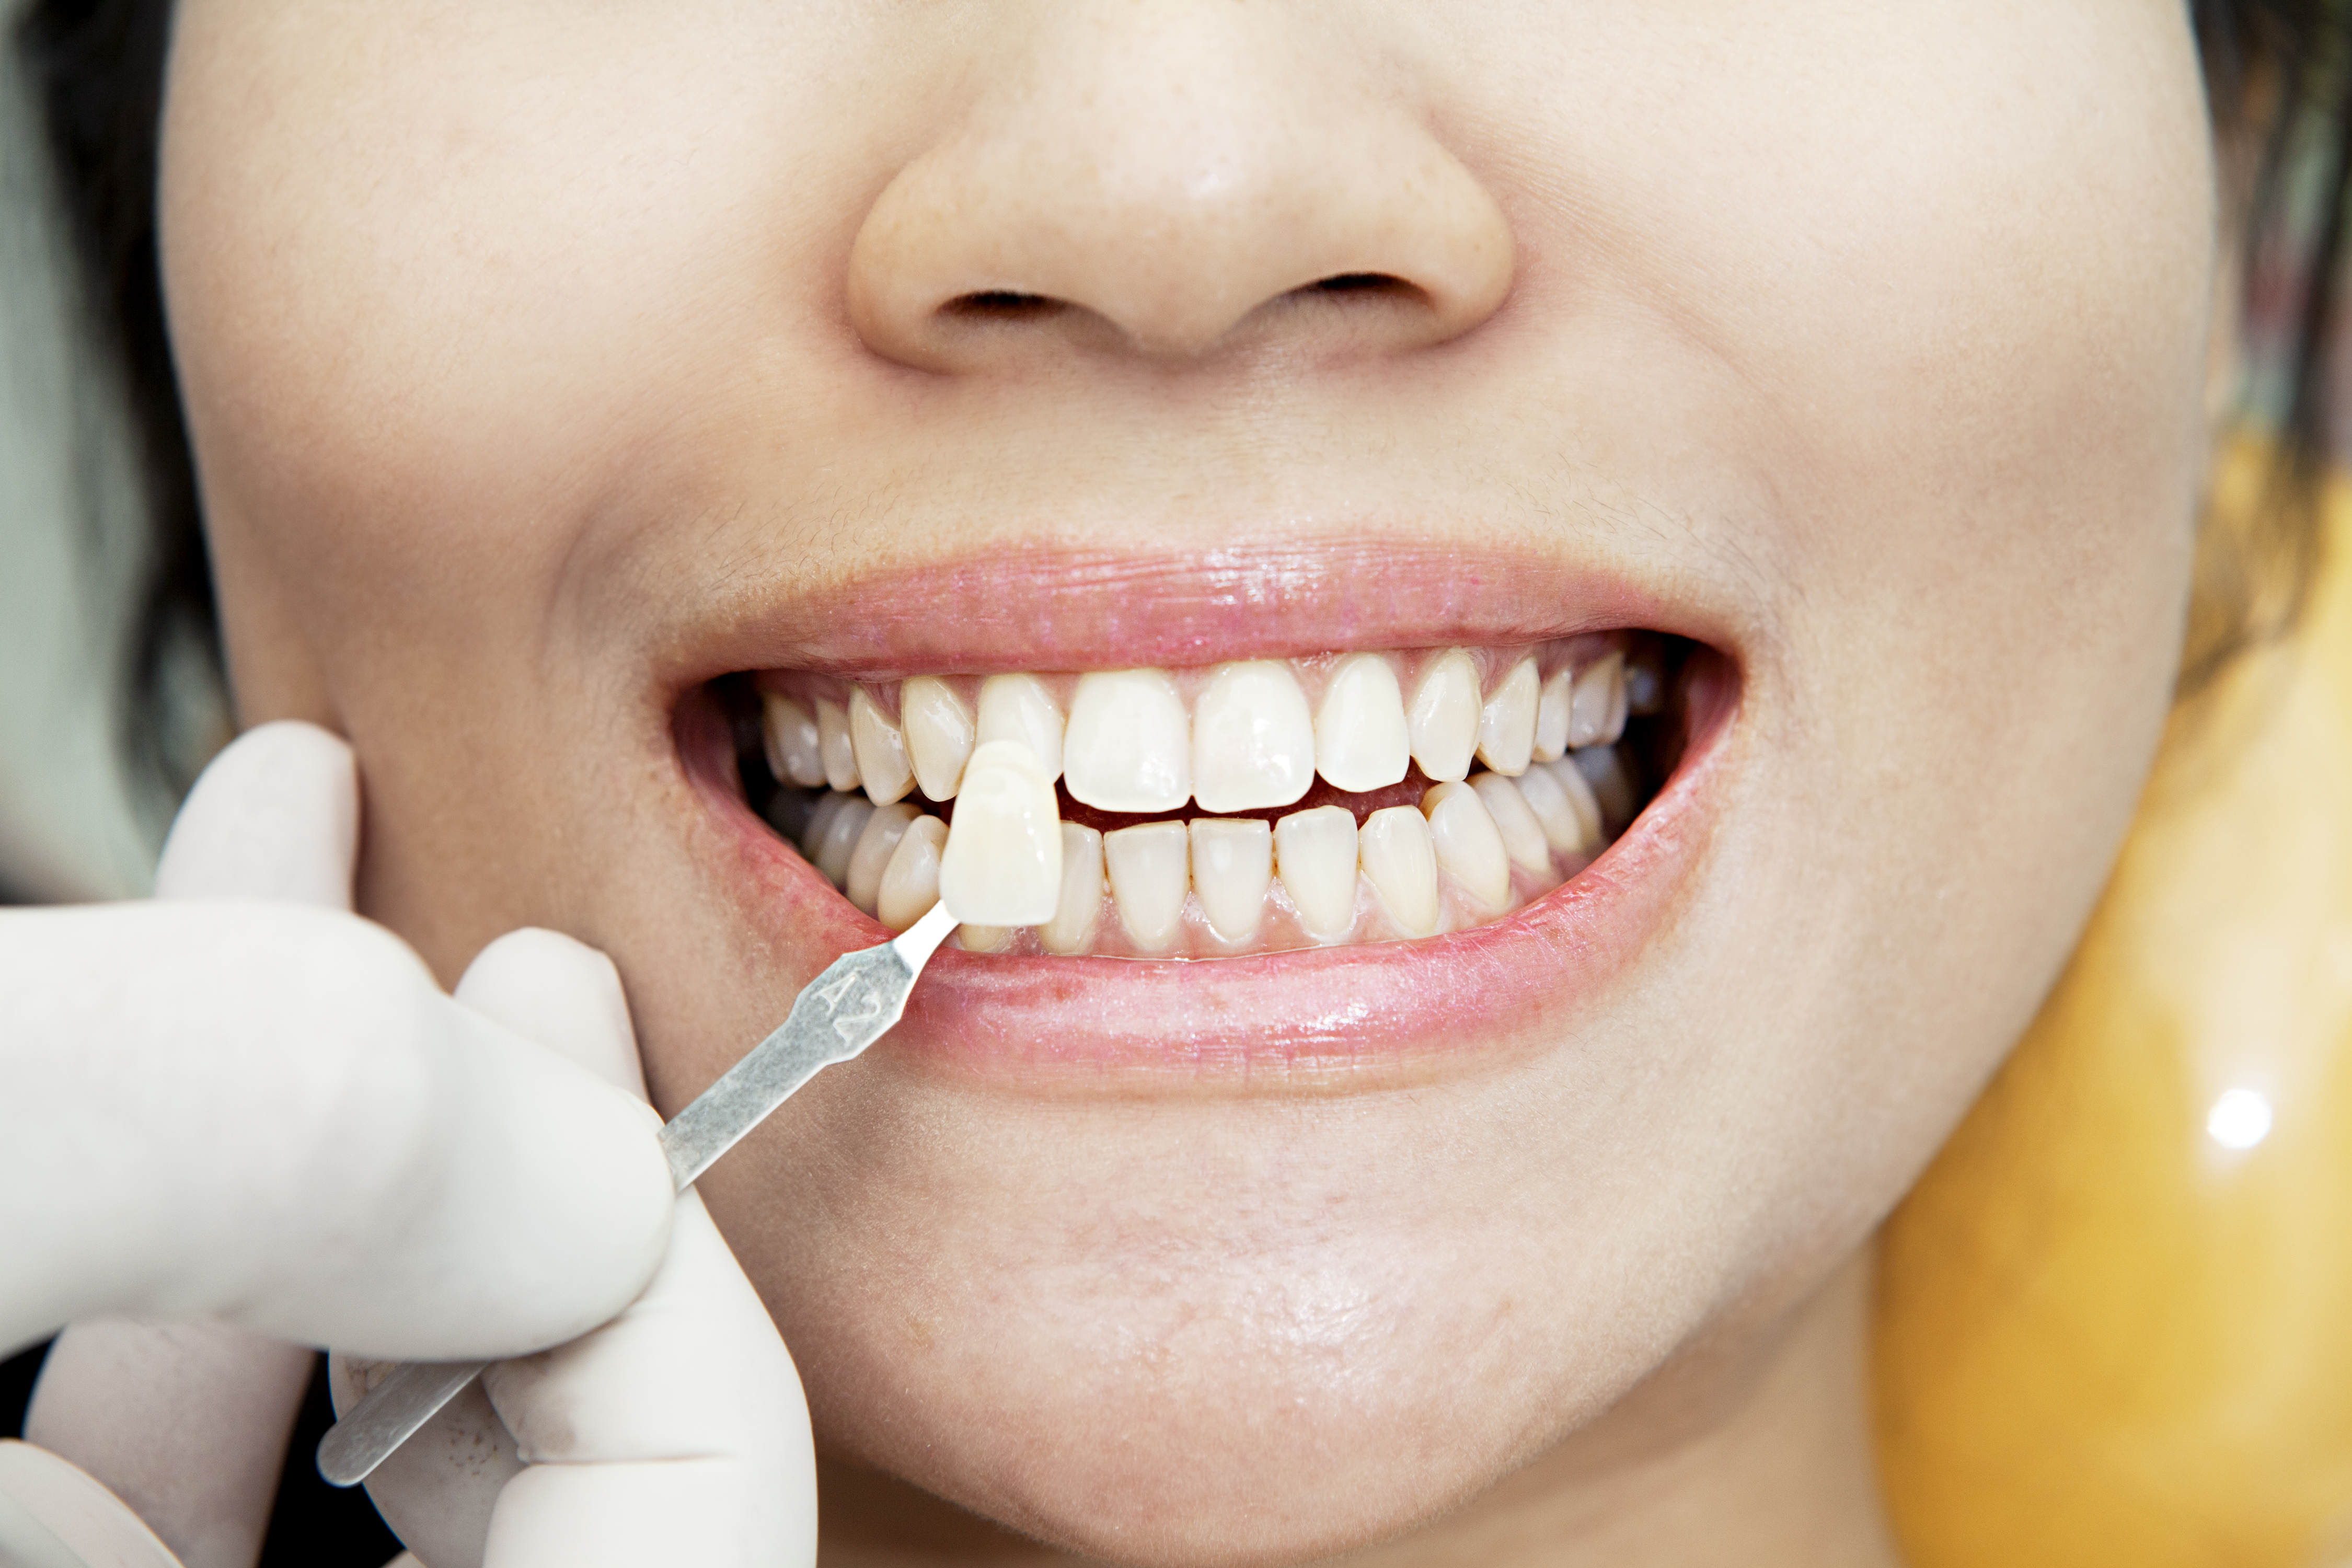 Whitelight Teeth Whitening System - The Best Teeth Whitening Product?